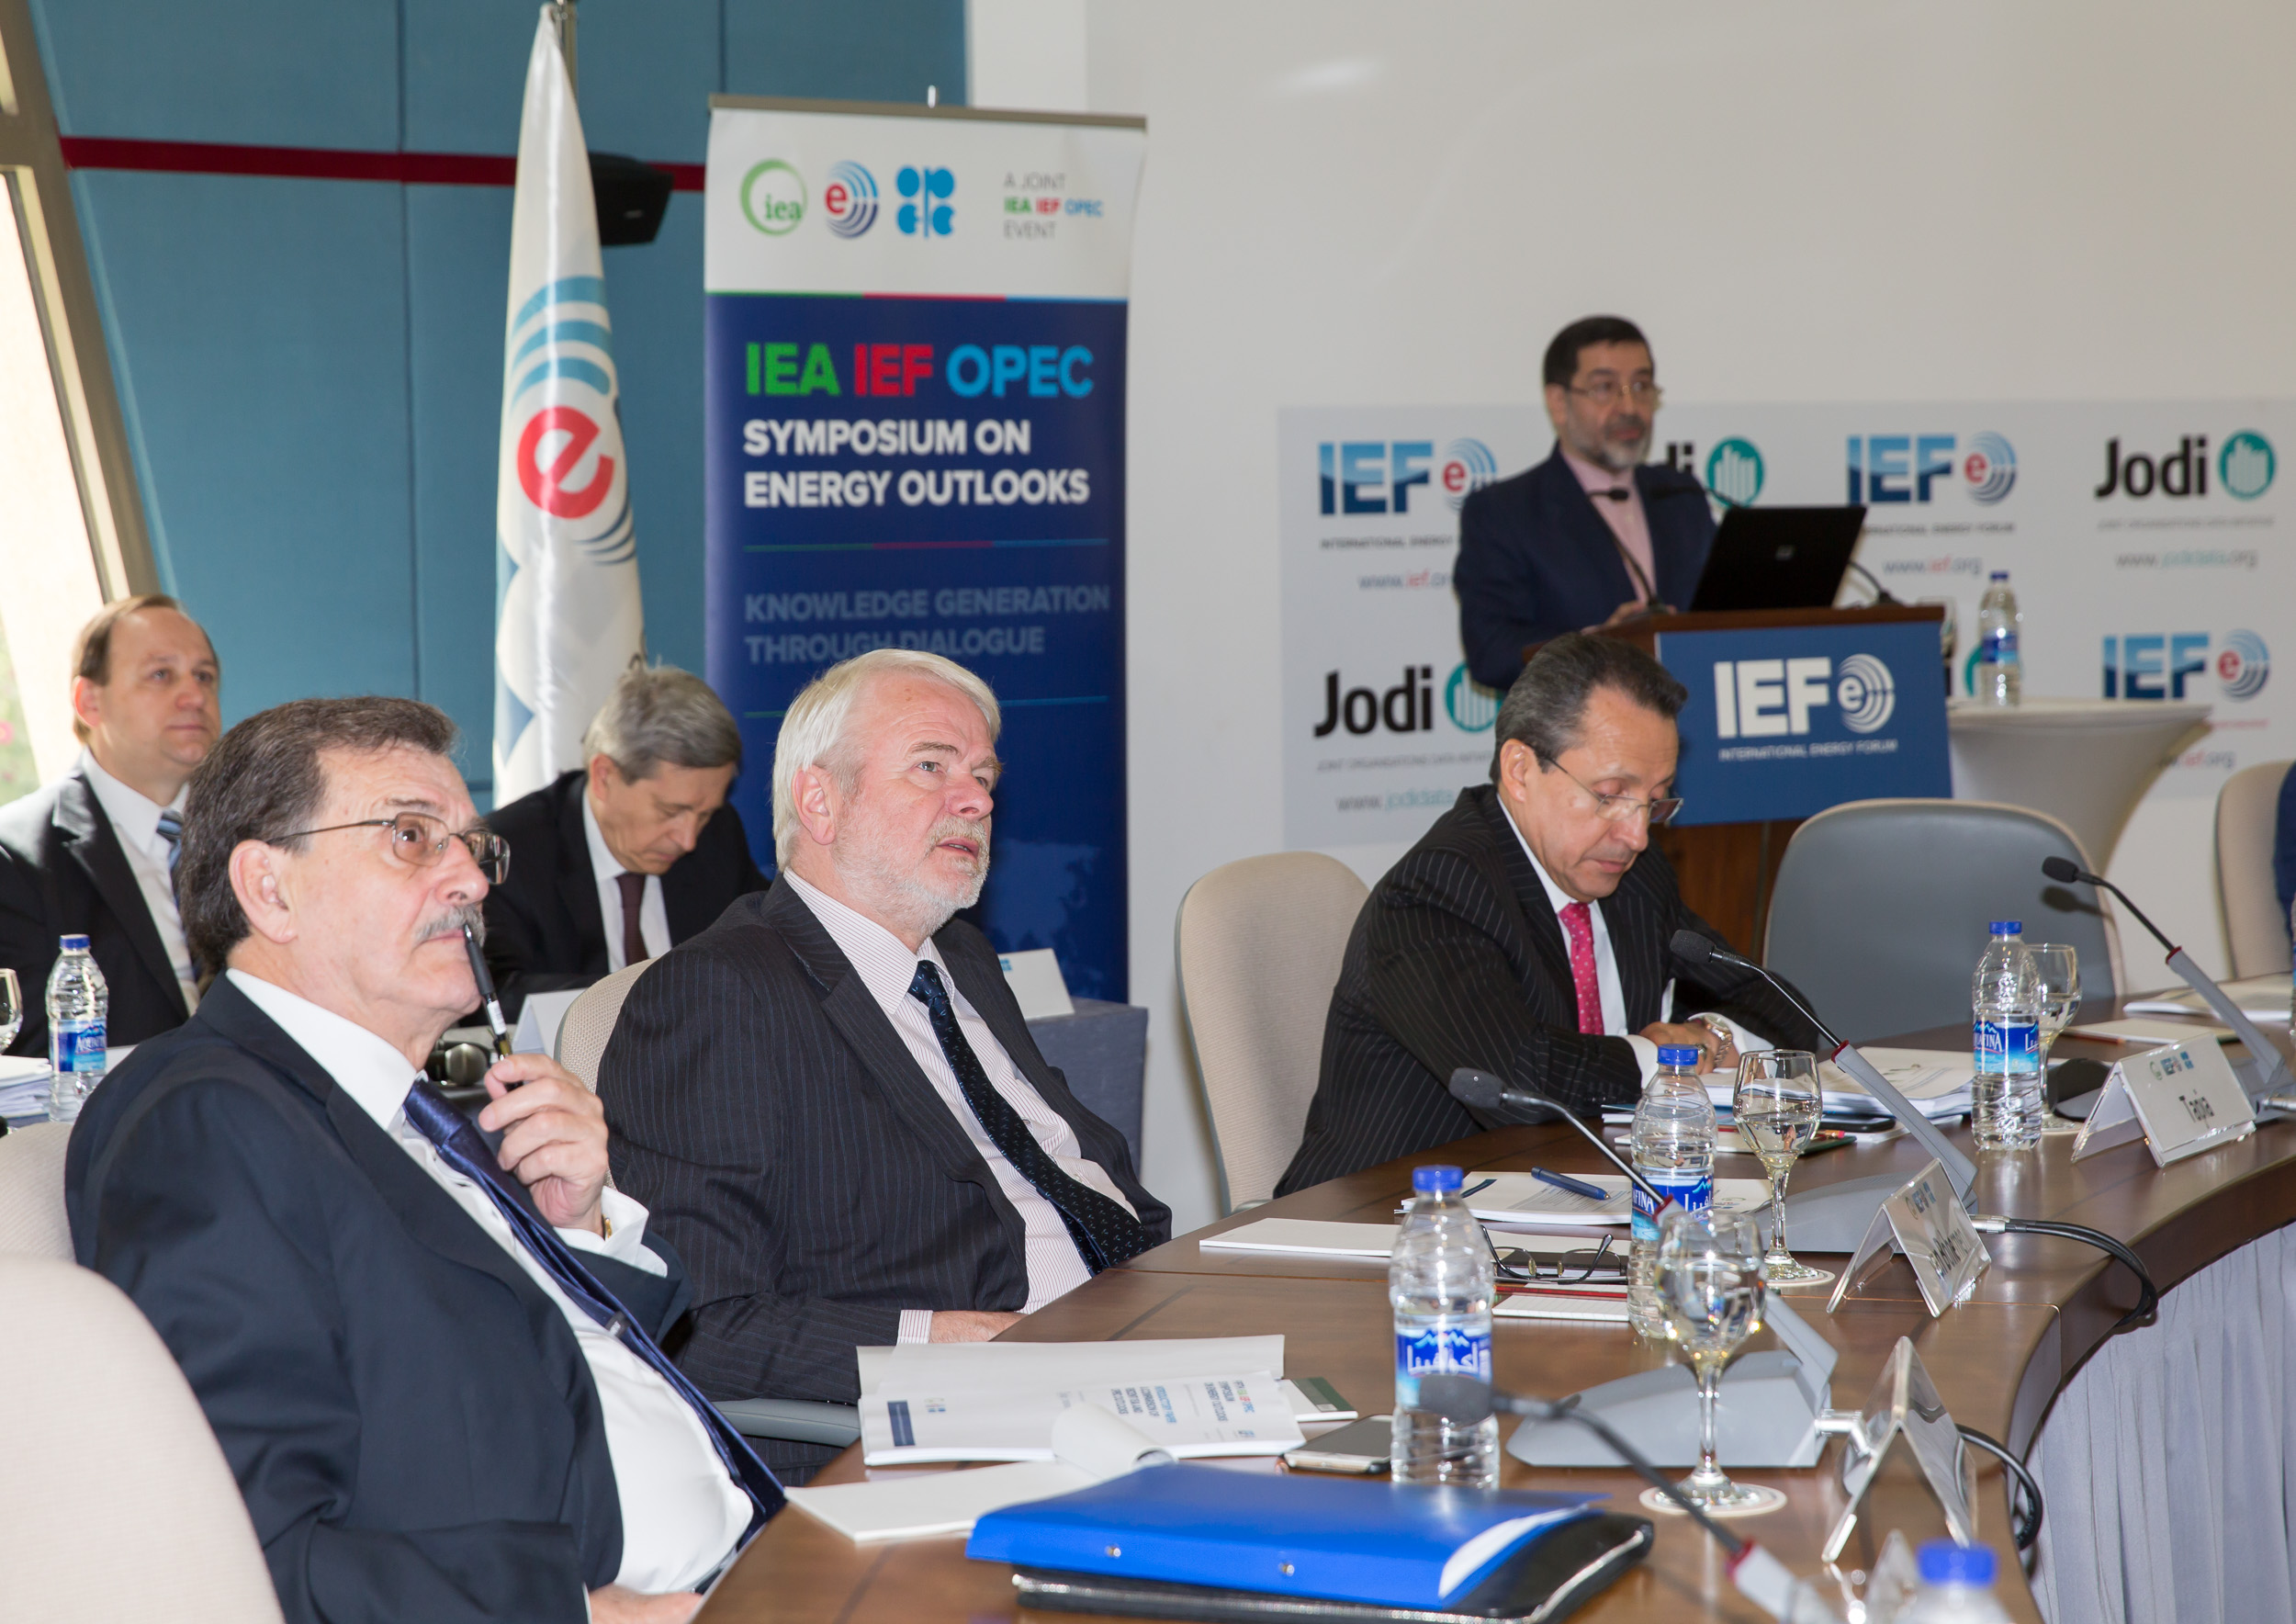 IEA IEF OPEC Symposium_21018